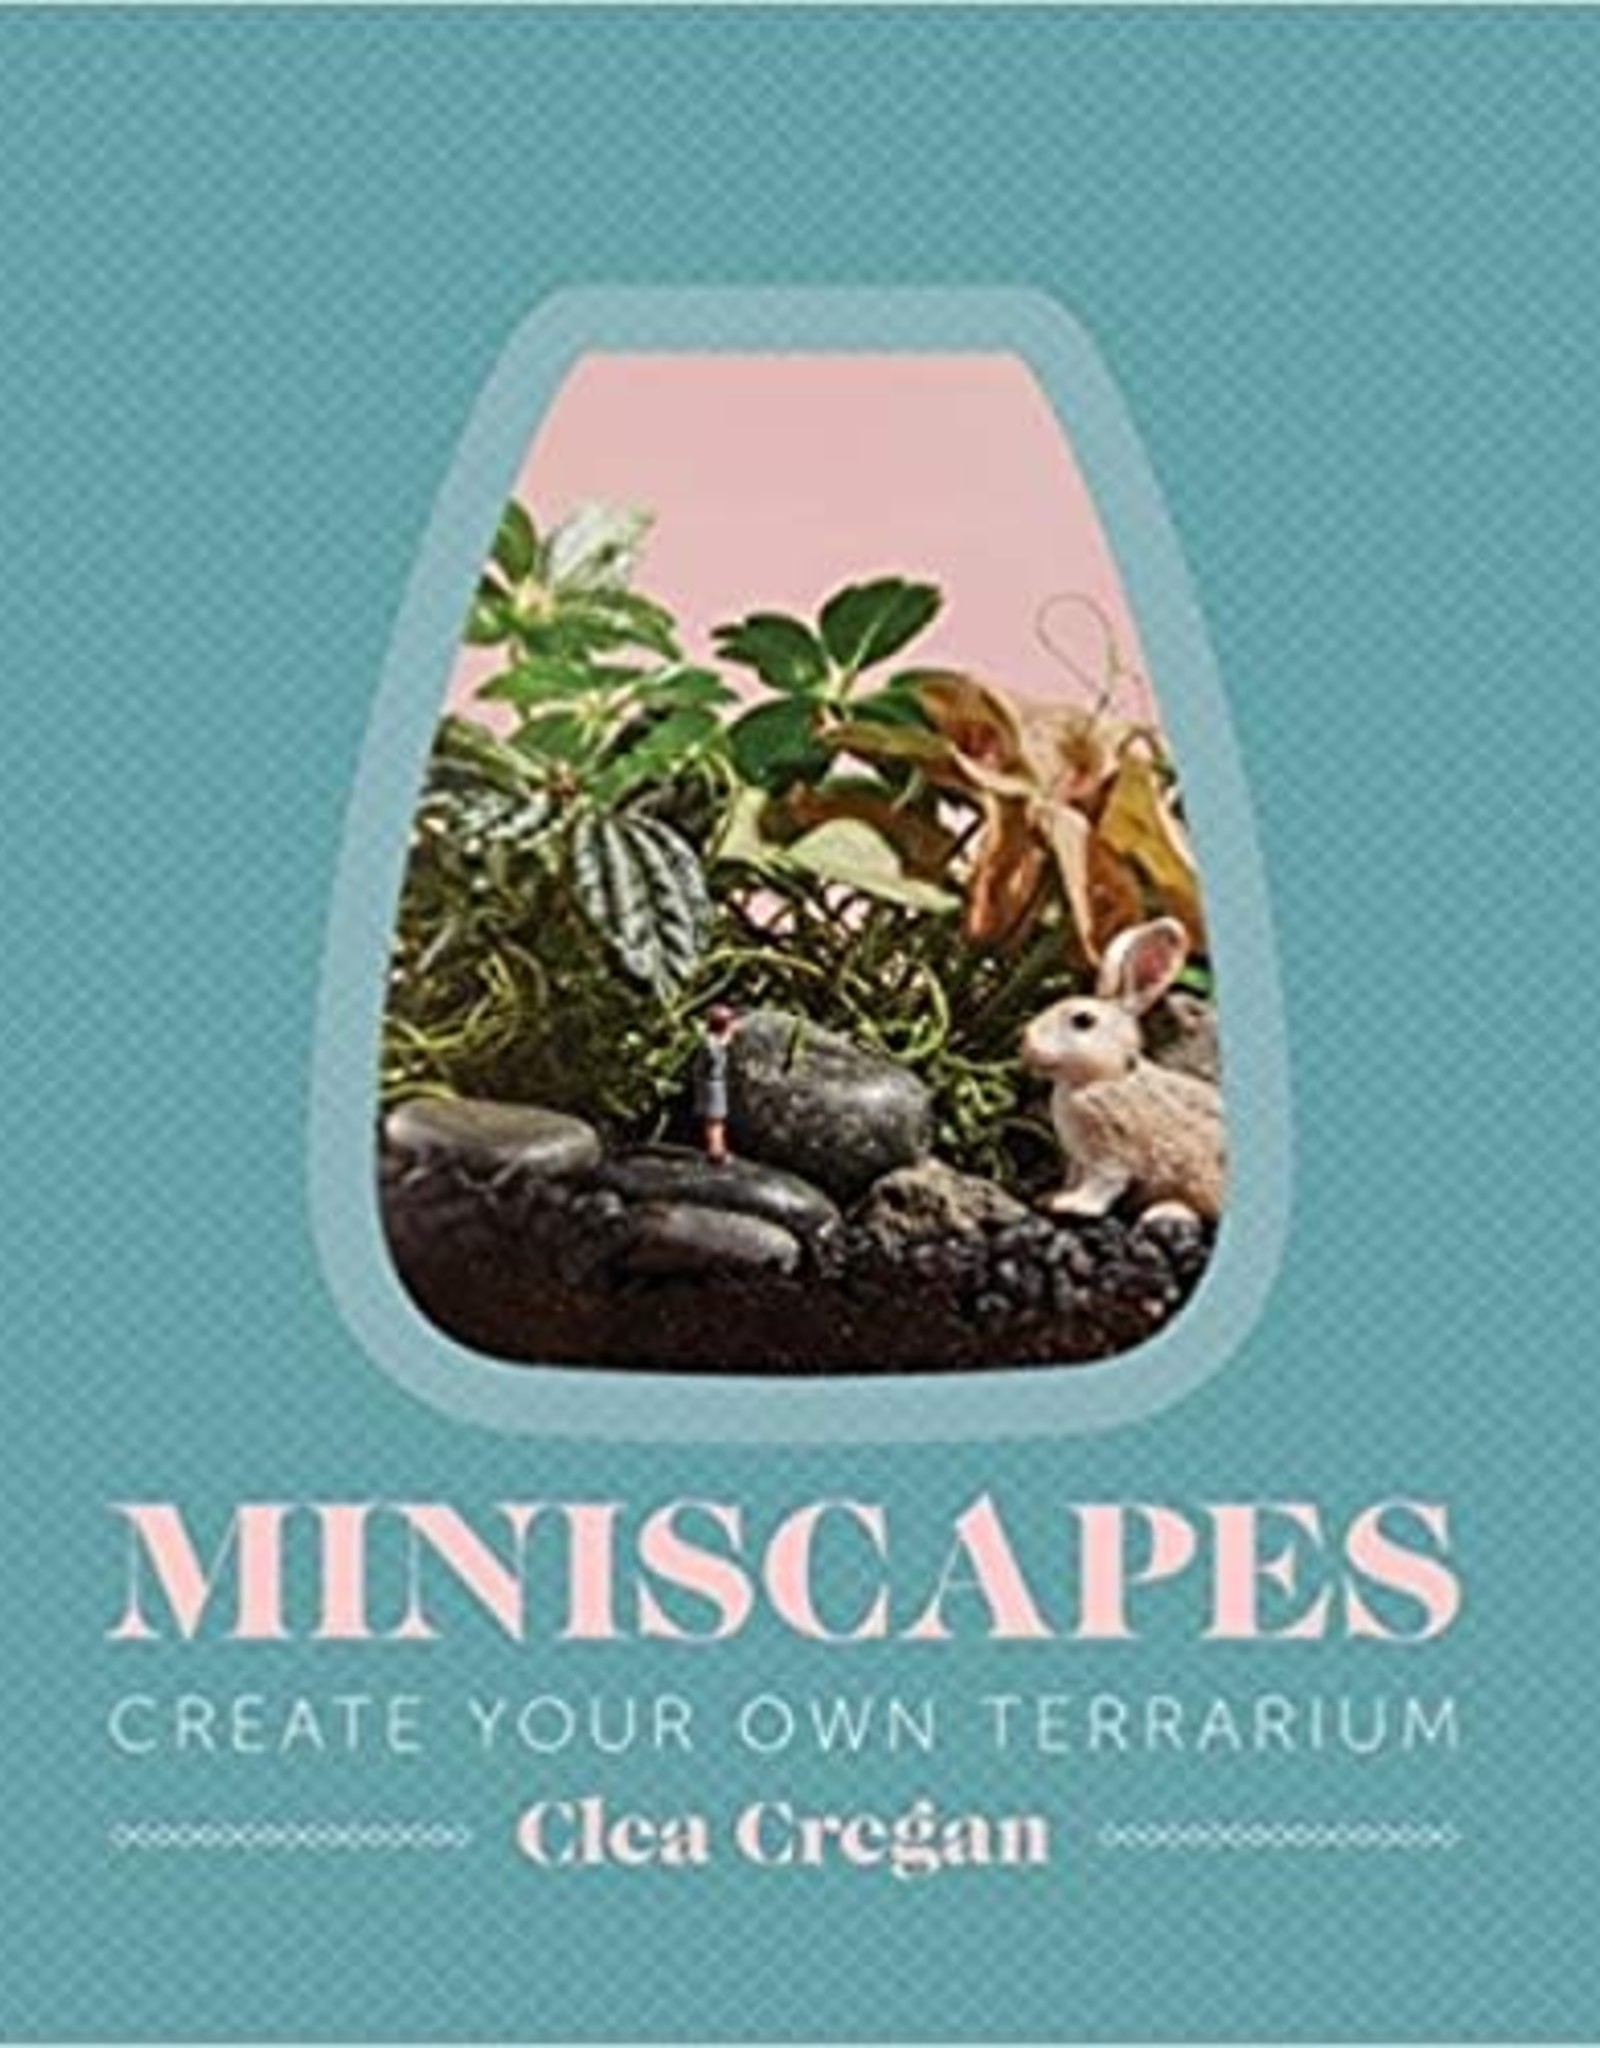 Miniscapes  Book